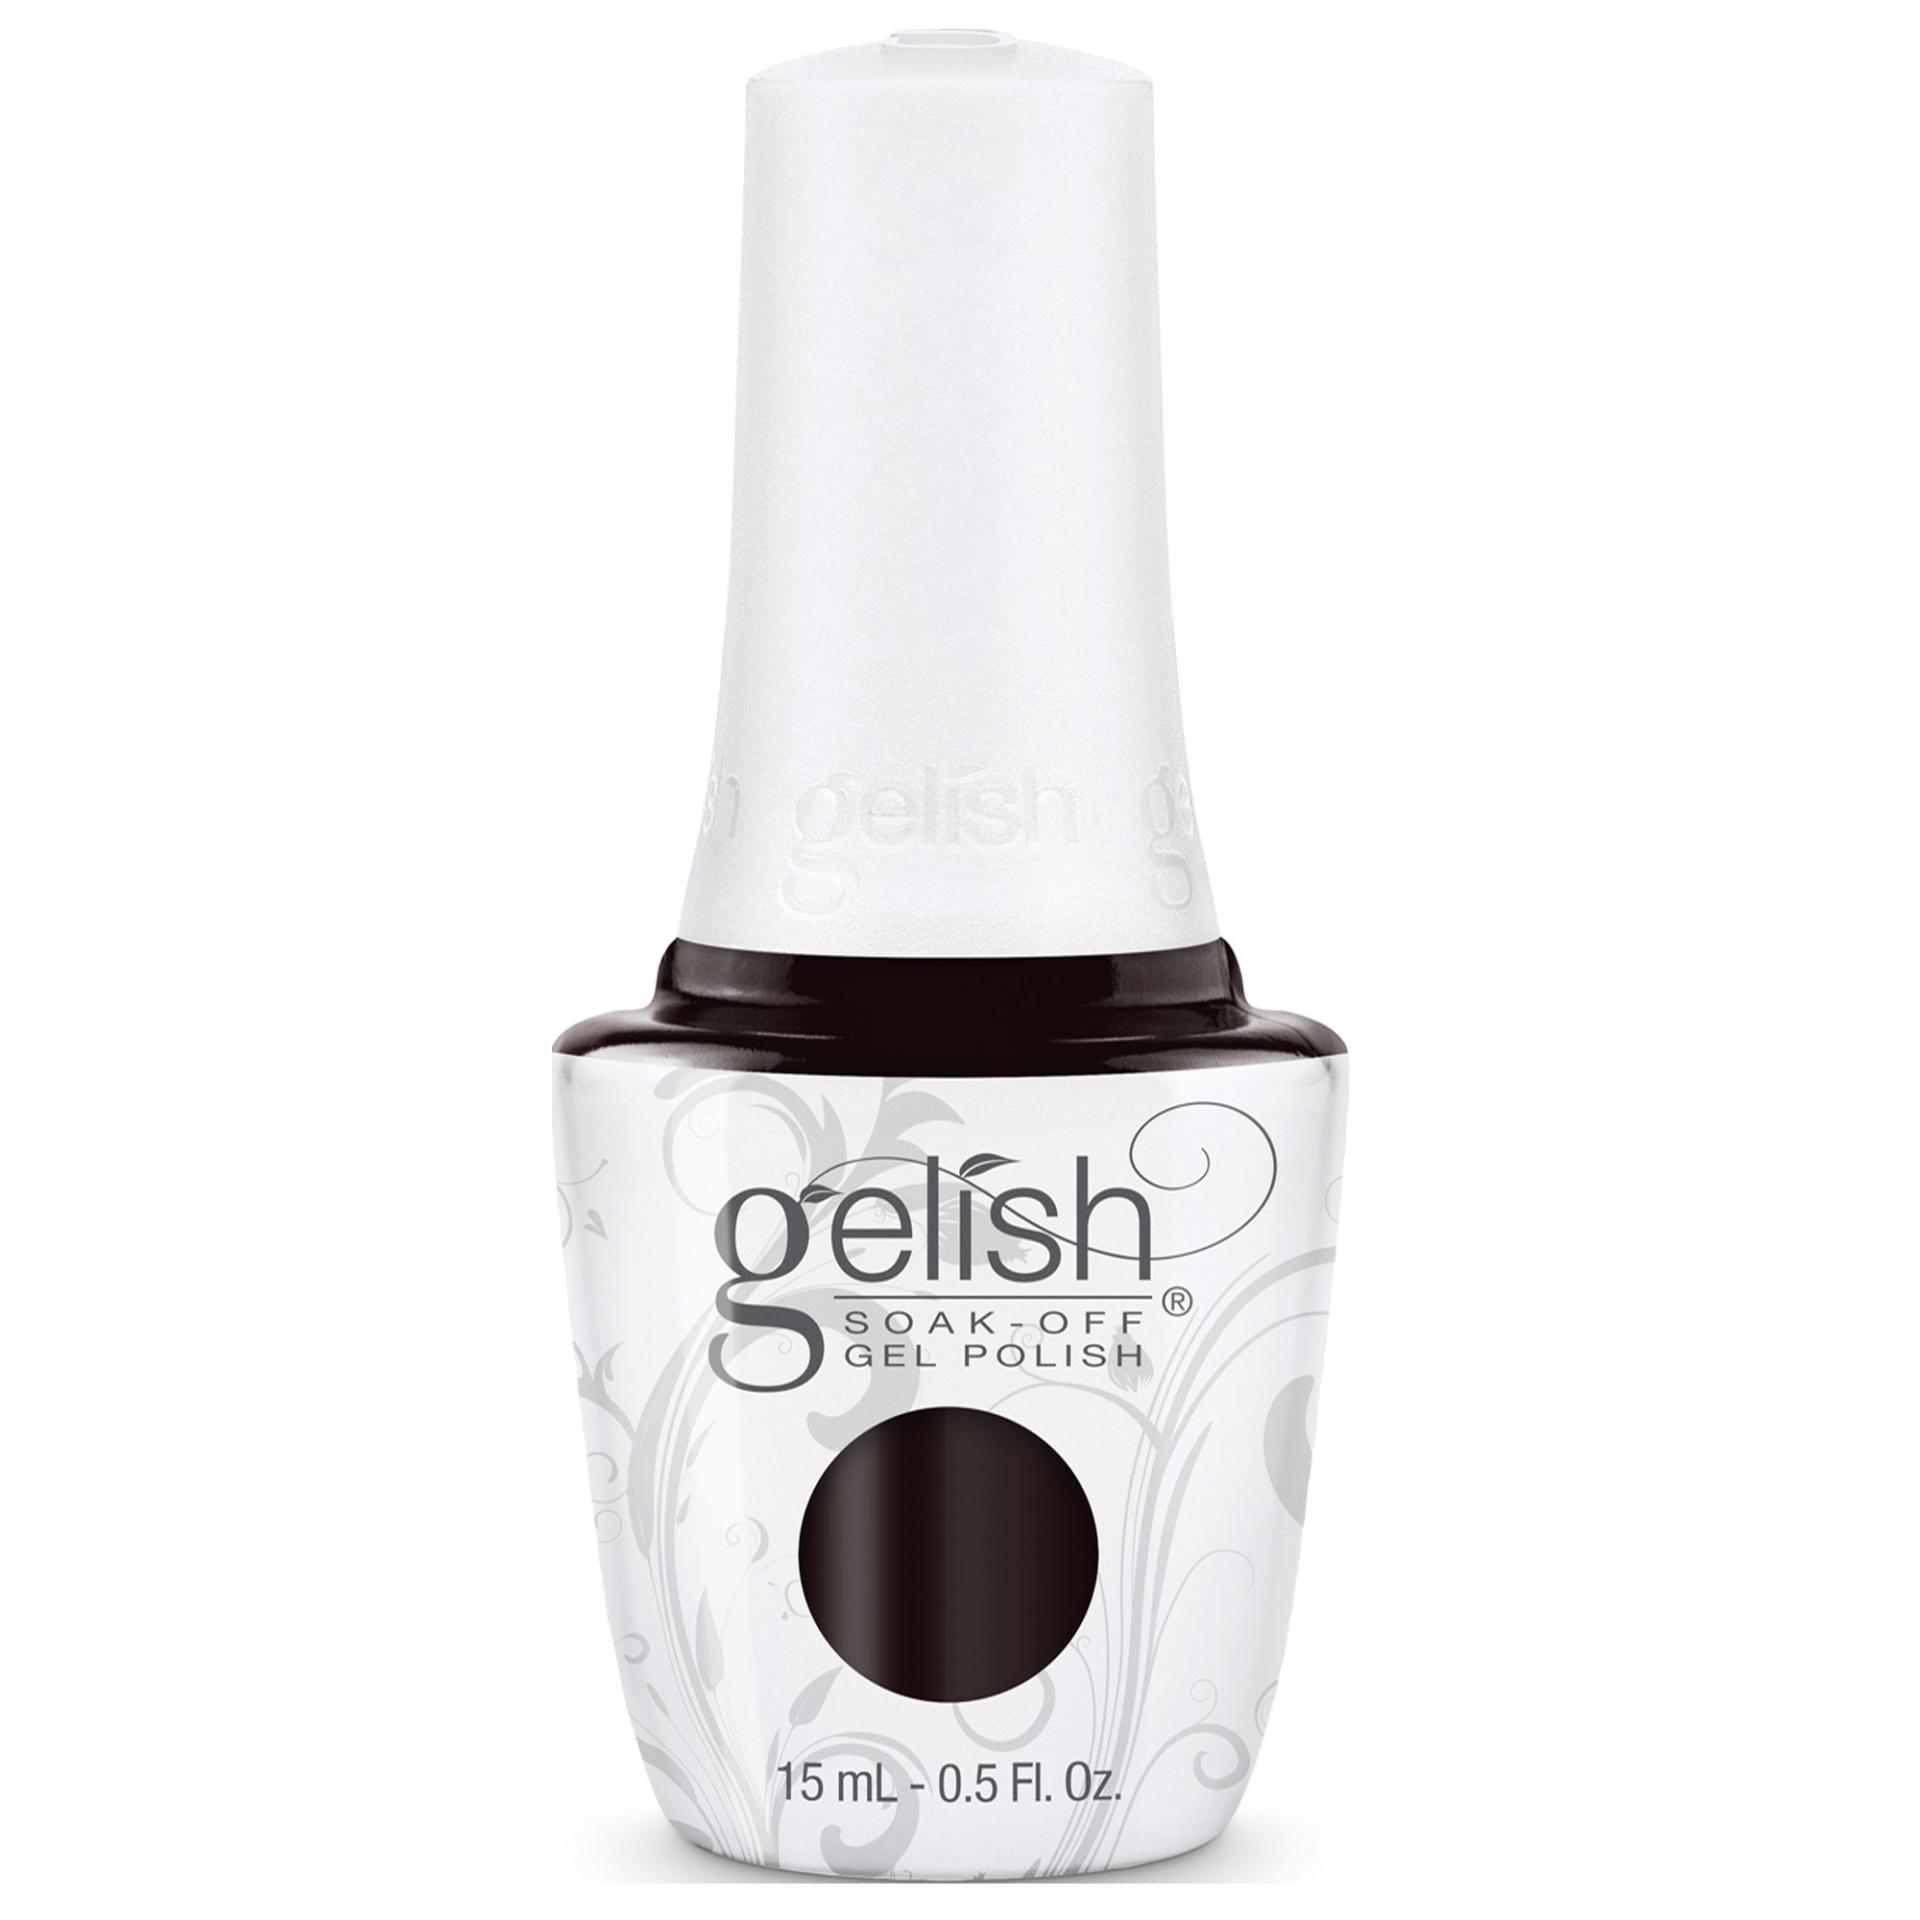 Gelish forever fabulous 2018 gel polish collection batting my lashes 15ml 1110327 p25747 100372 zoom